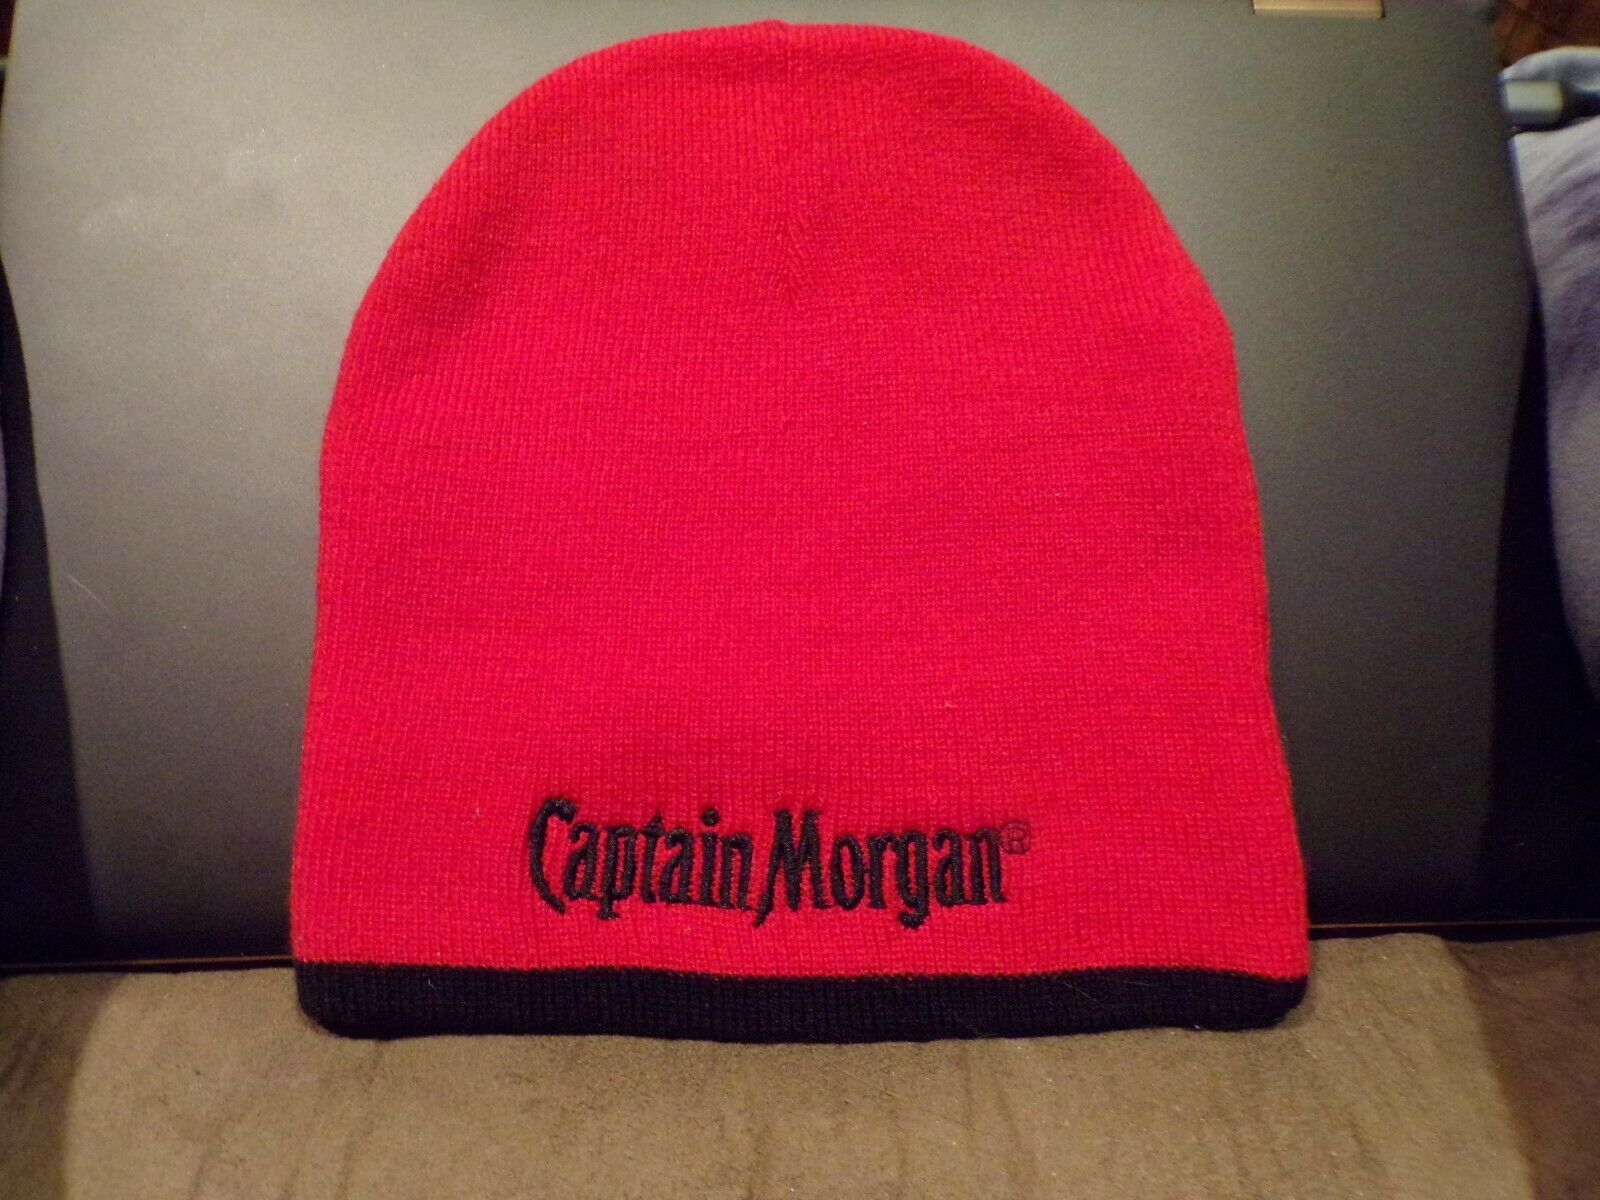 New Captain Morgan Embroidered Skull Cap Beanie Cap Hat Red On Black Edge Osr